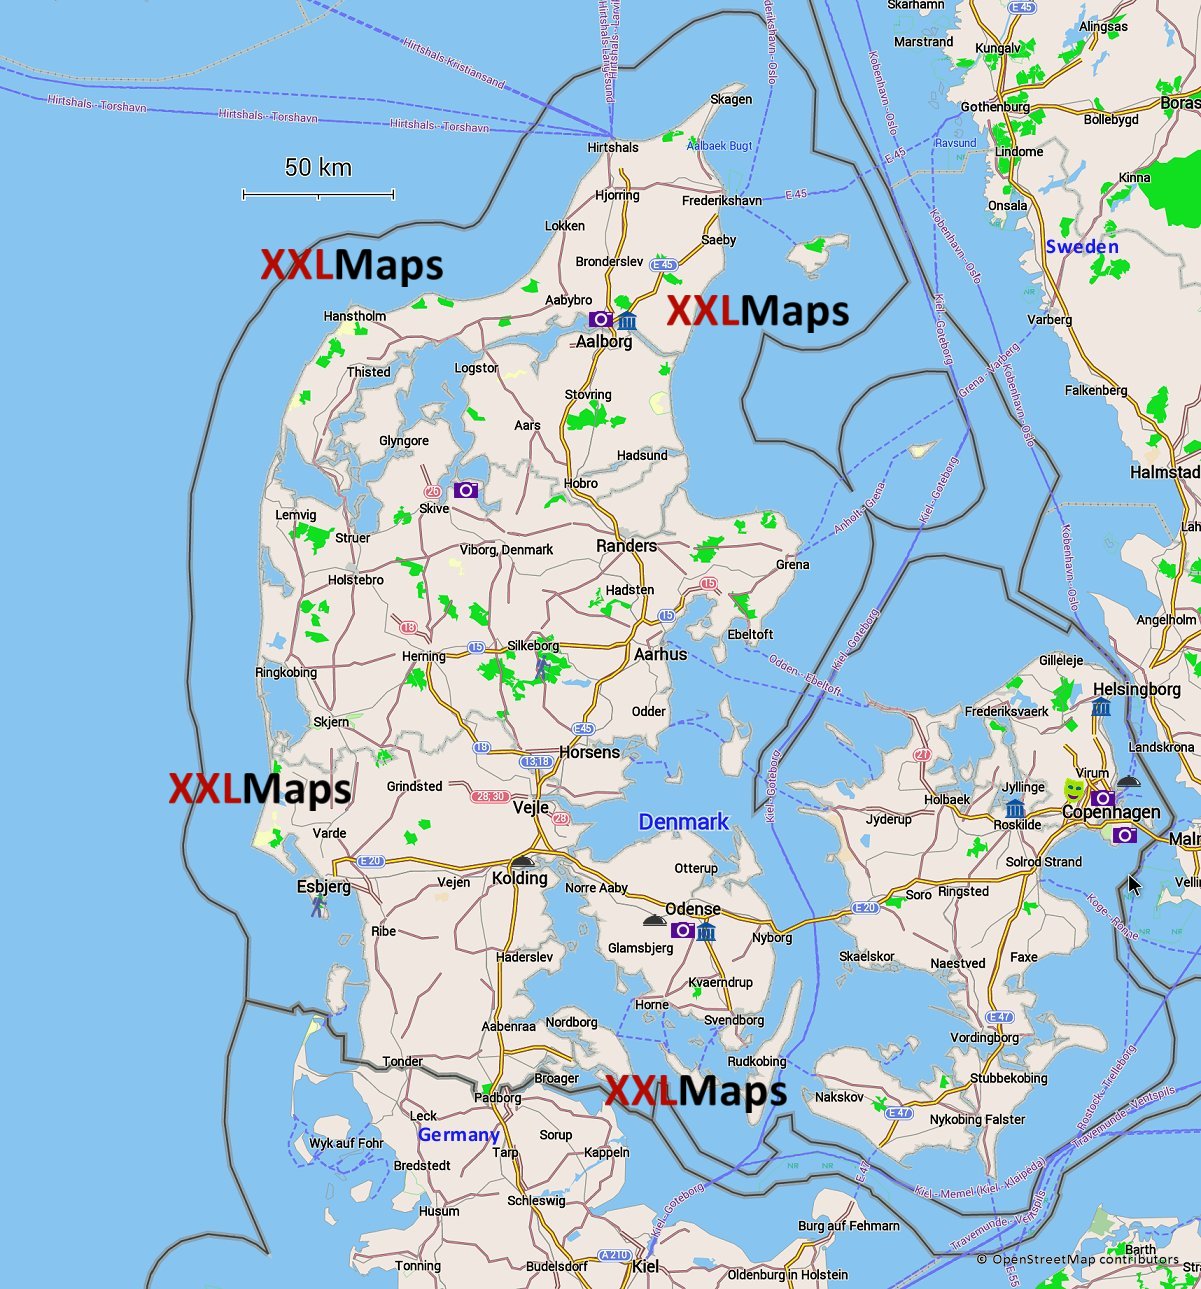 Turist kart over Danmark